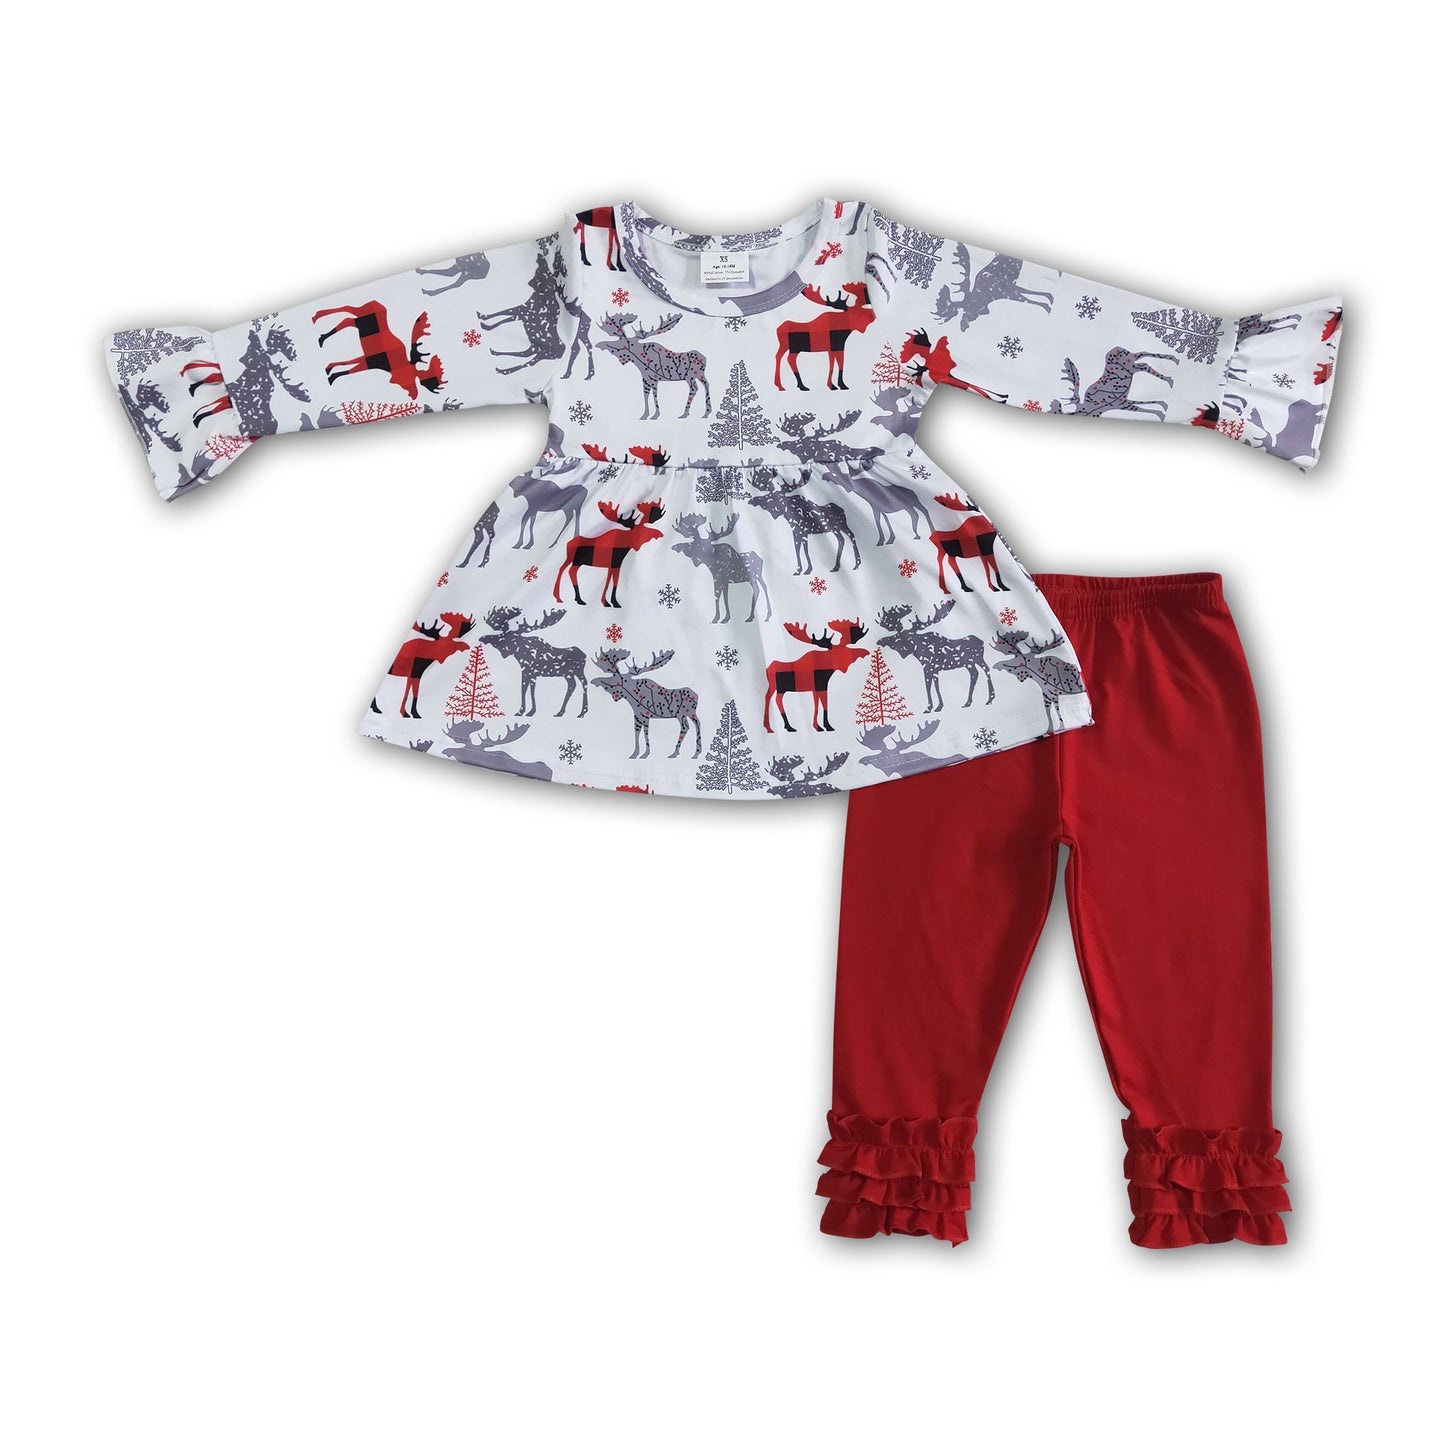 Reindeer tunic red leggings girls Christmas clothing sets